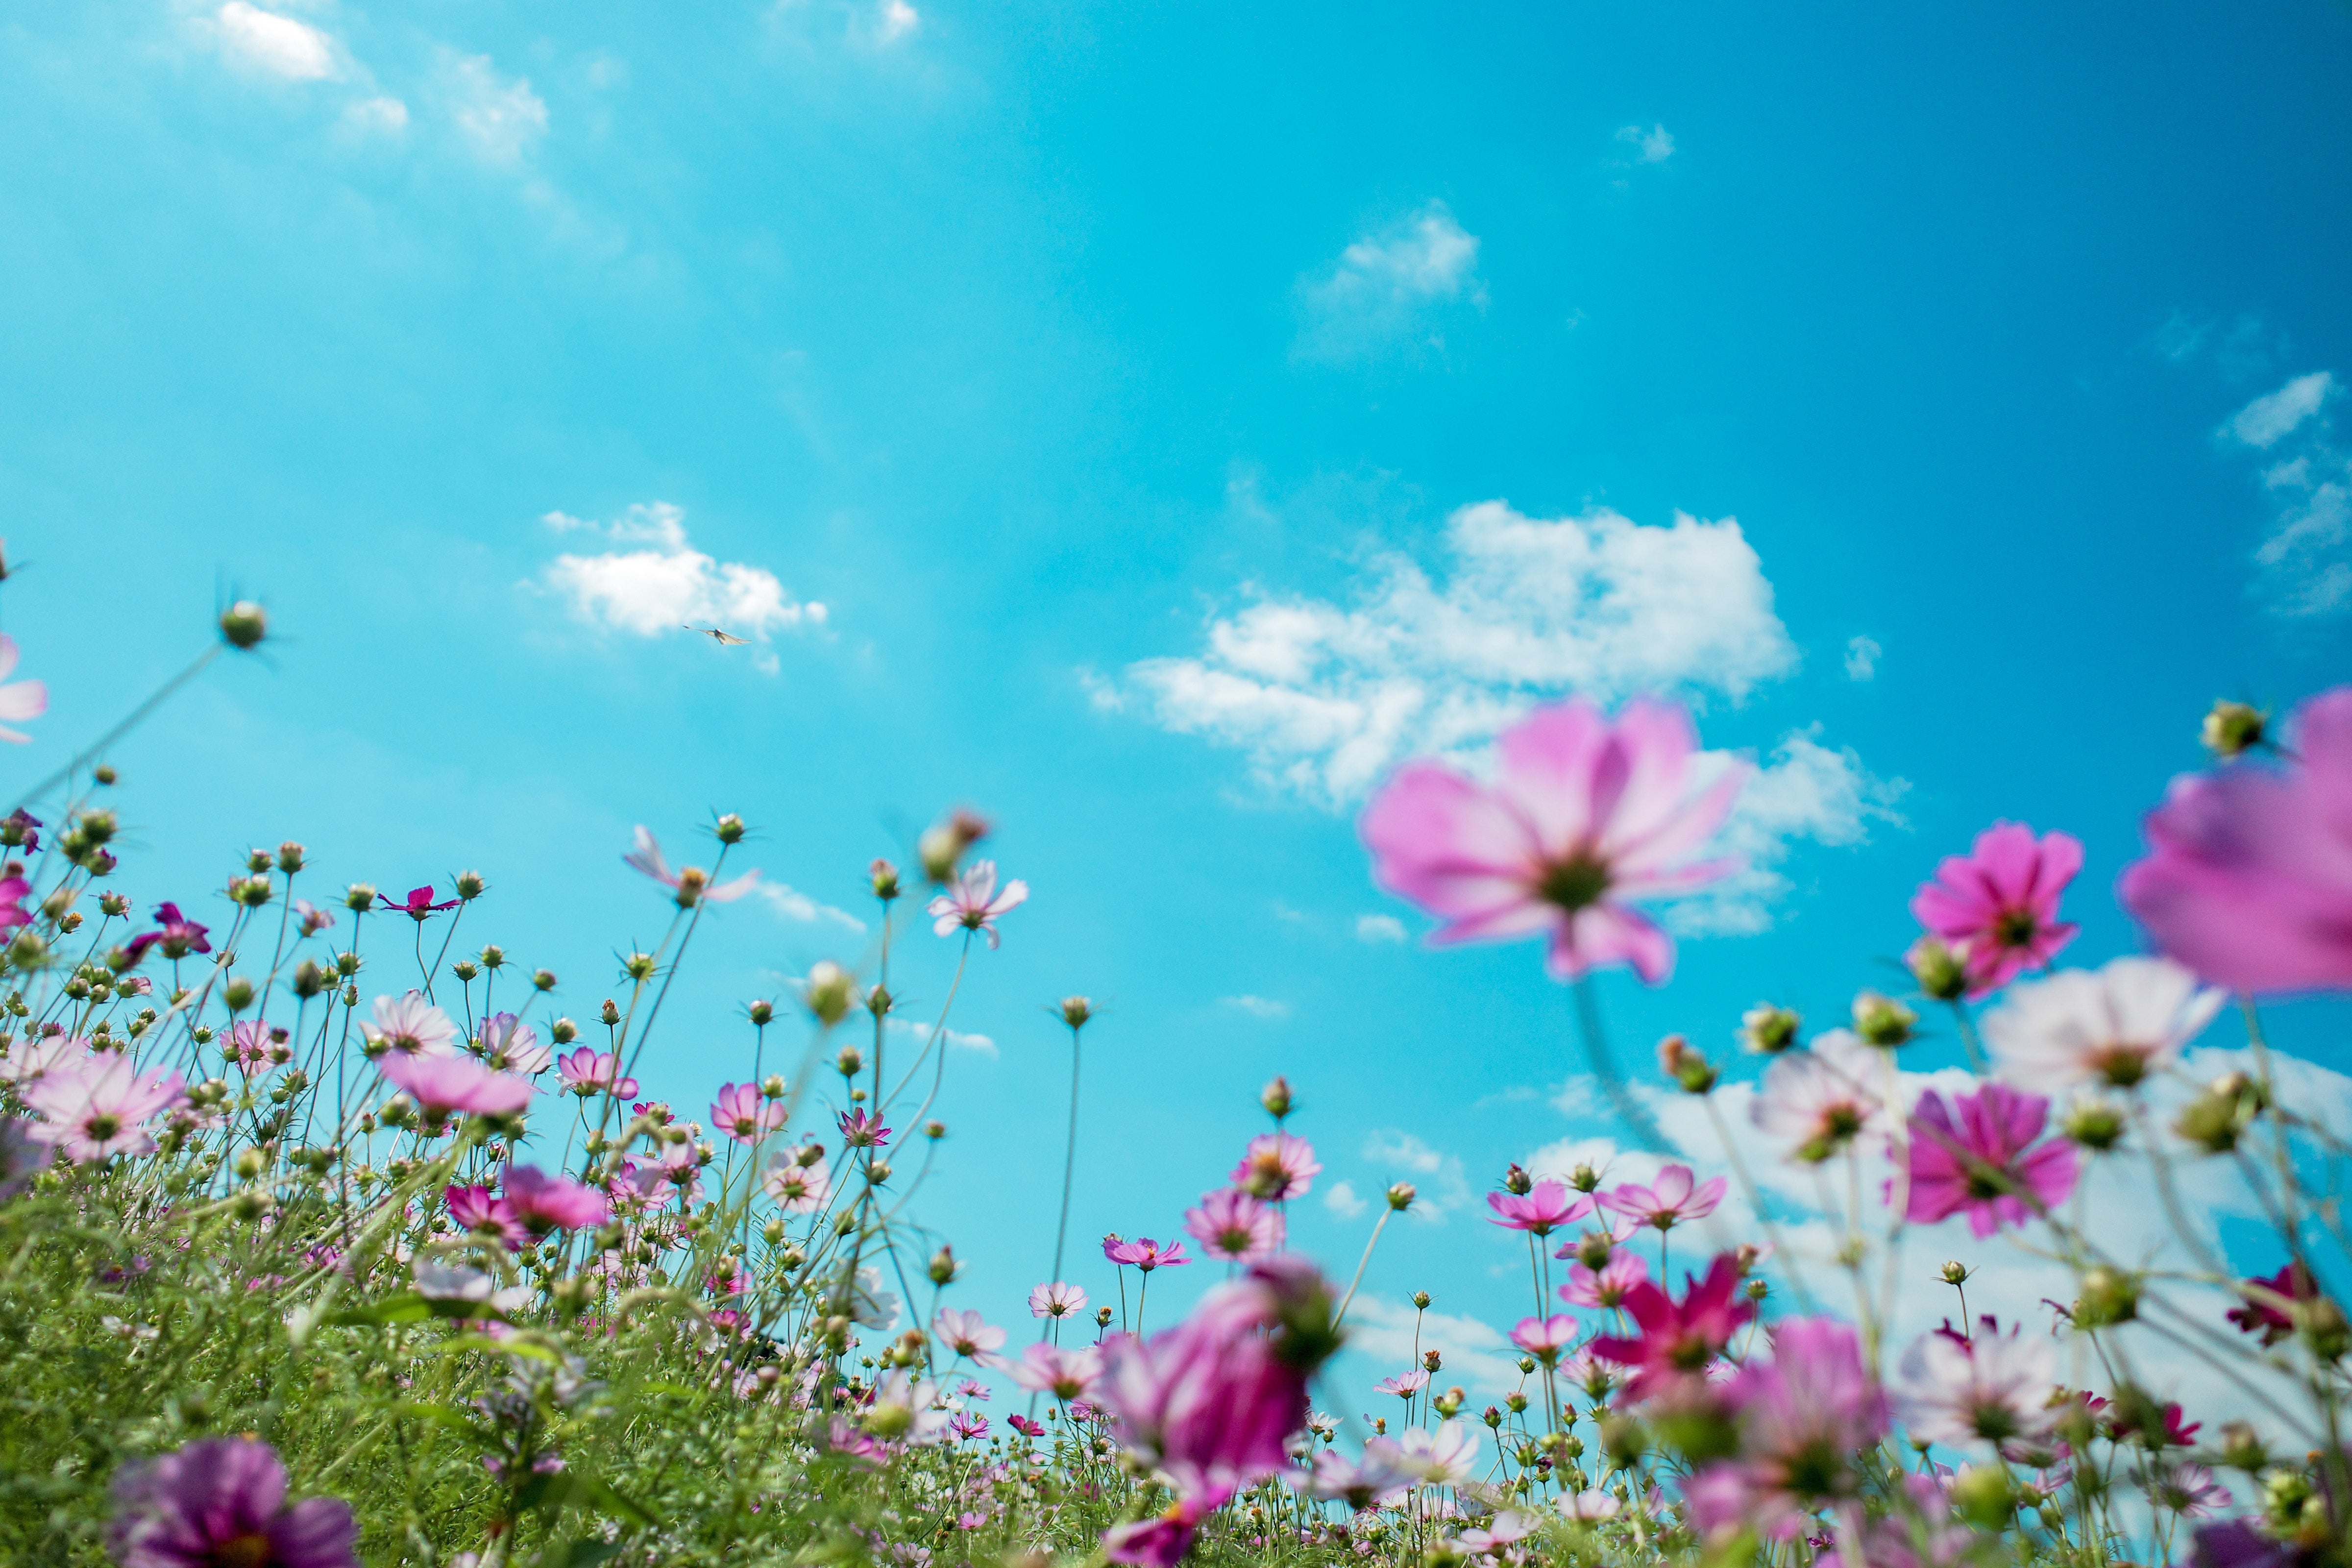 Fleurige bloemenpartij onder blauwe lucht